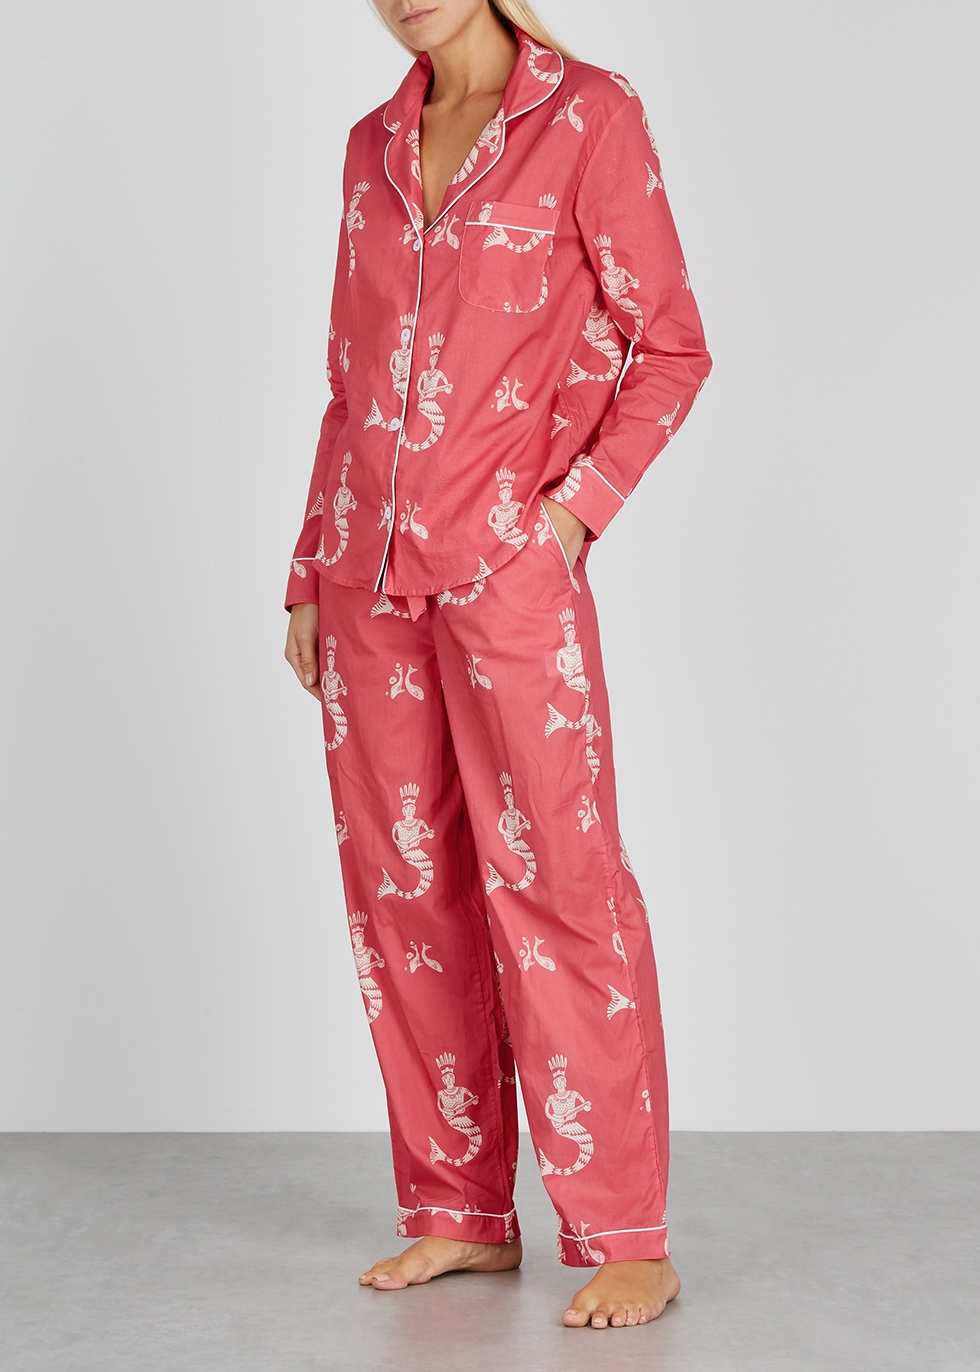 Sirena printed cotton pyjama set - Desmond & Dempsey